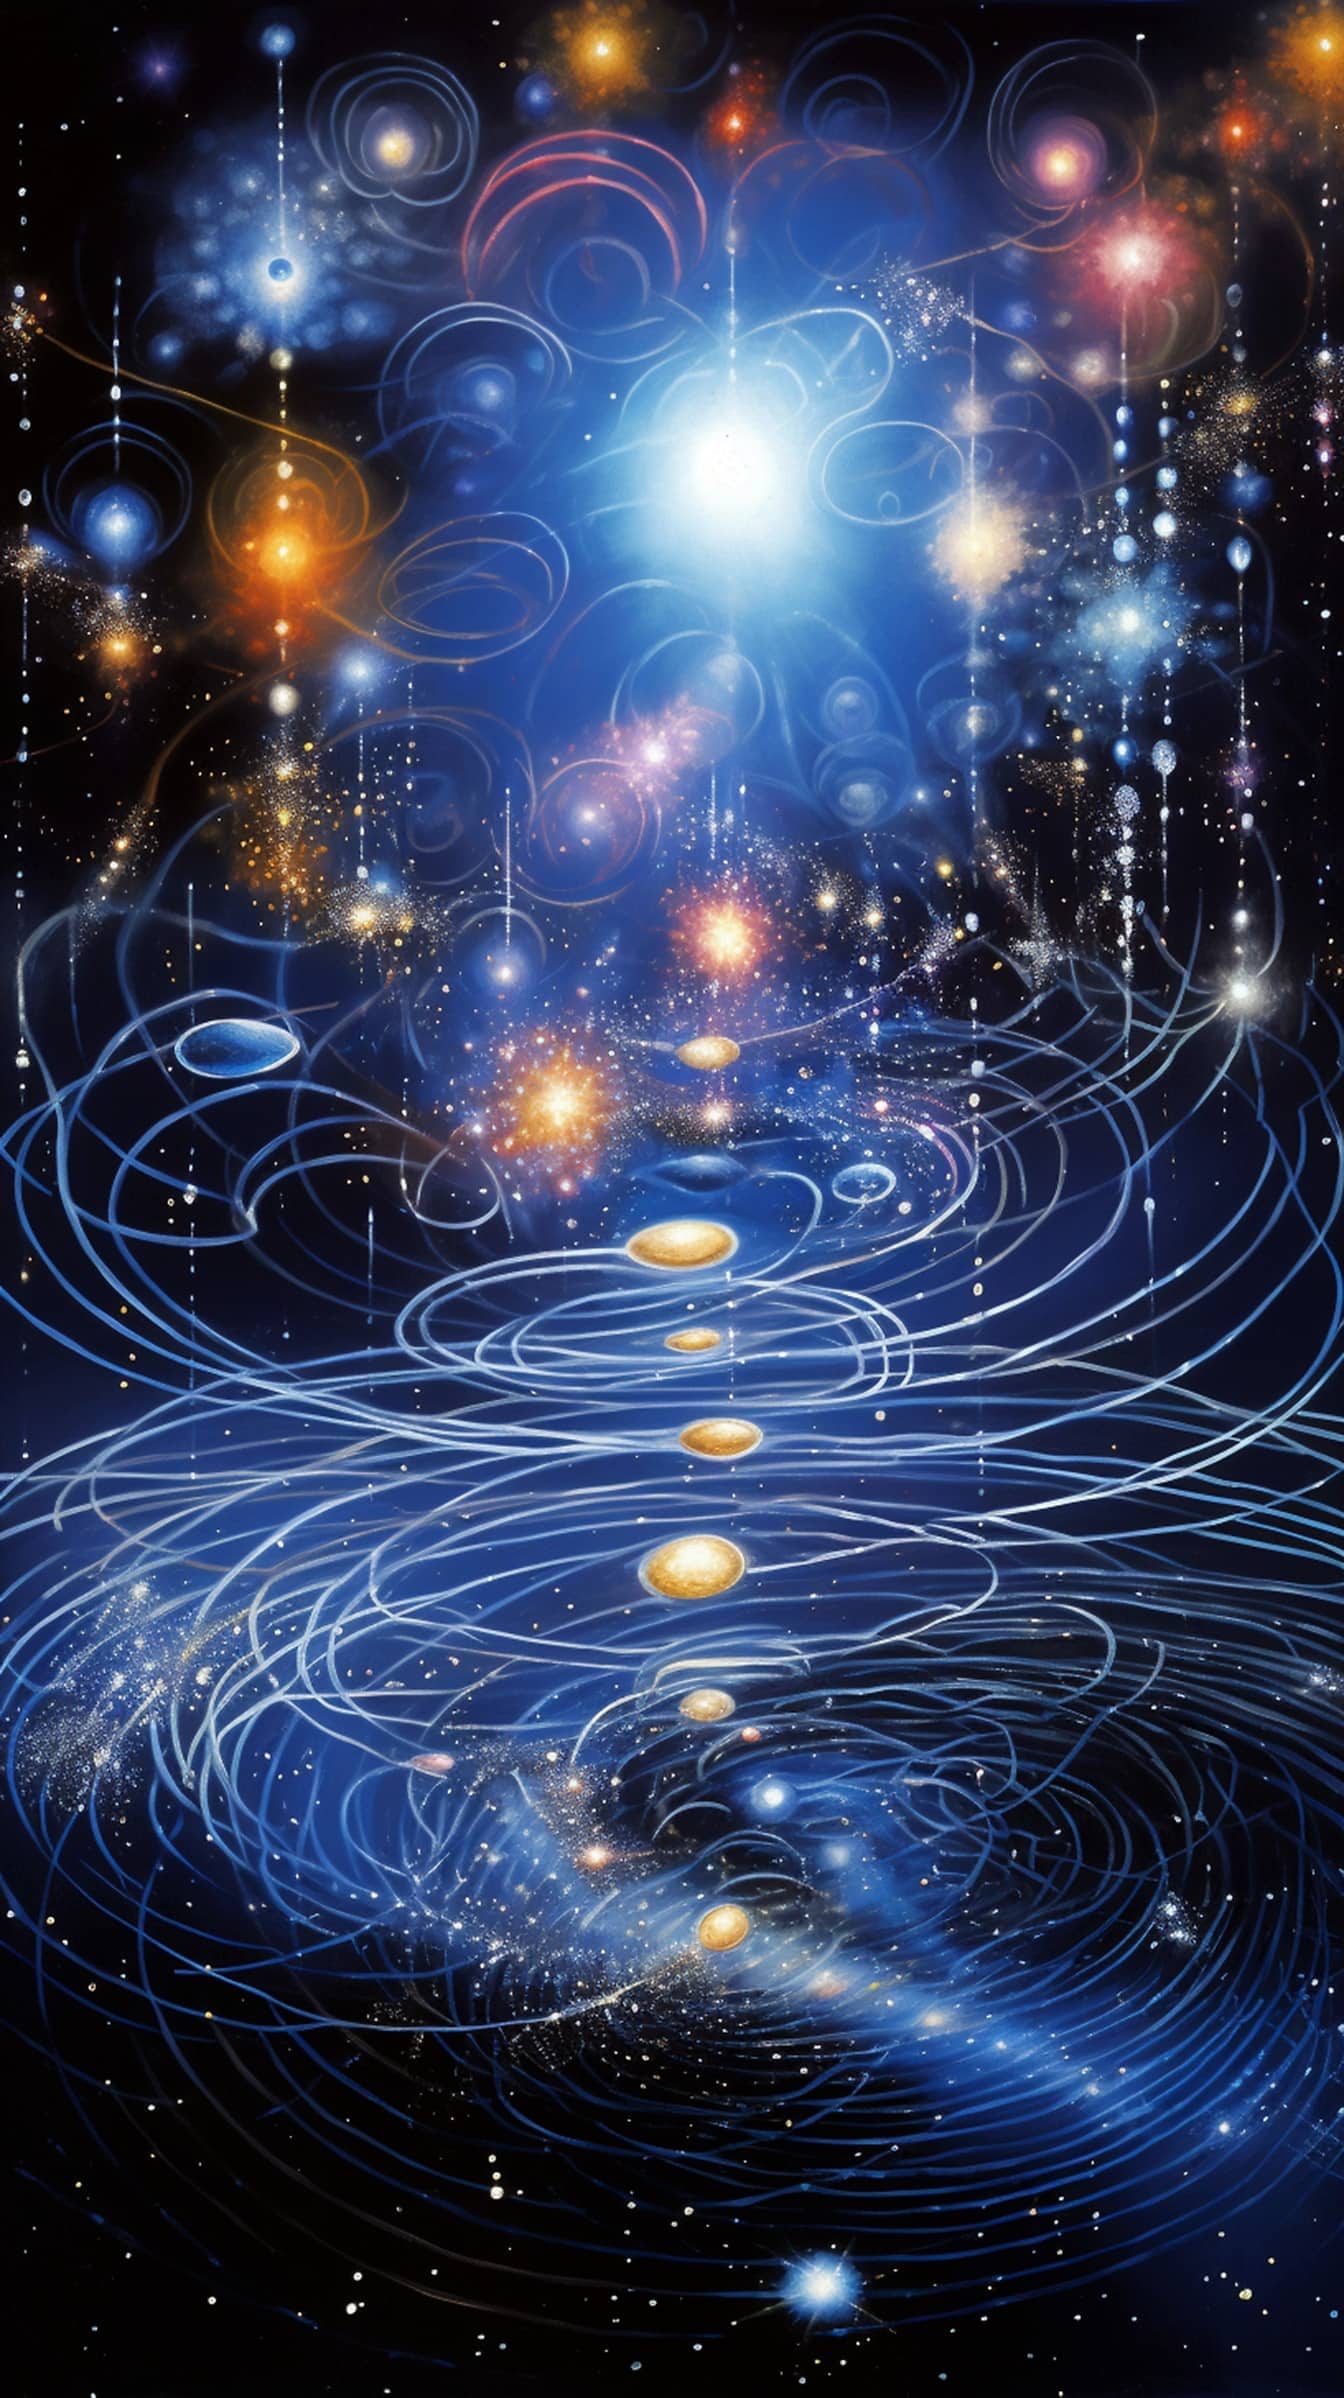 Kosmos energi astrologi virvel illustration